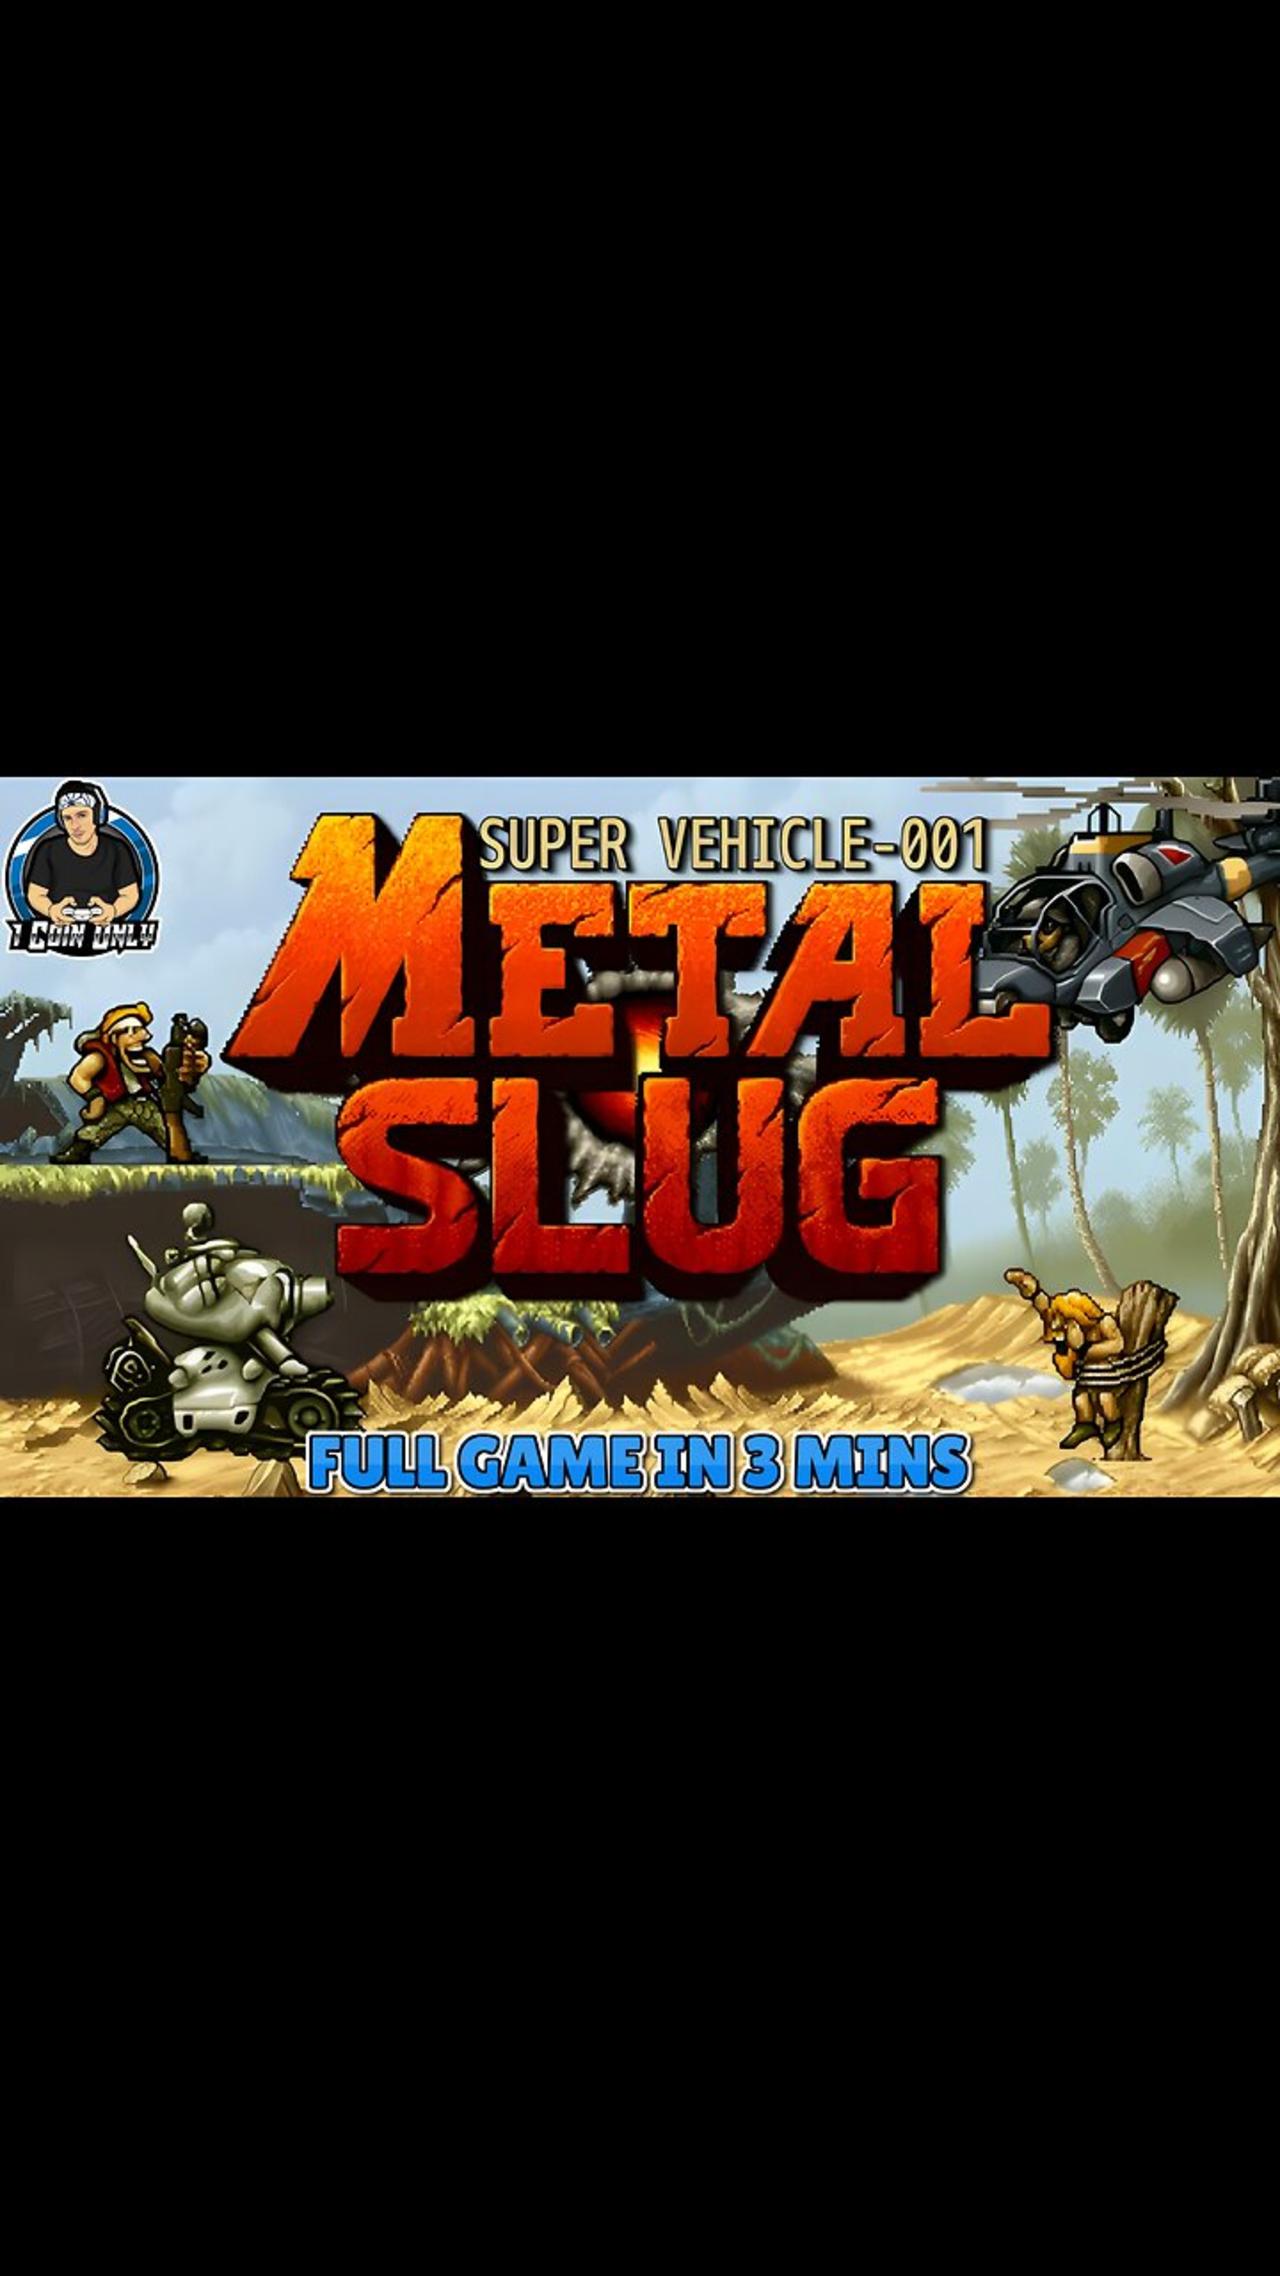 Metal Slug (Arcade) - Full Game in 3 Minutes